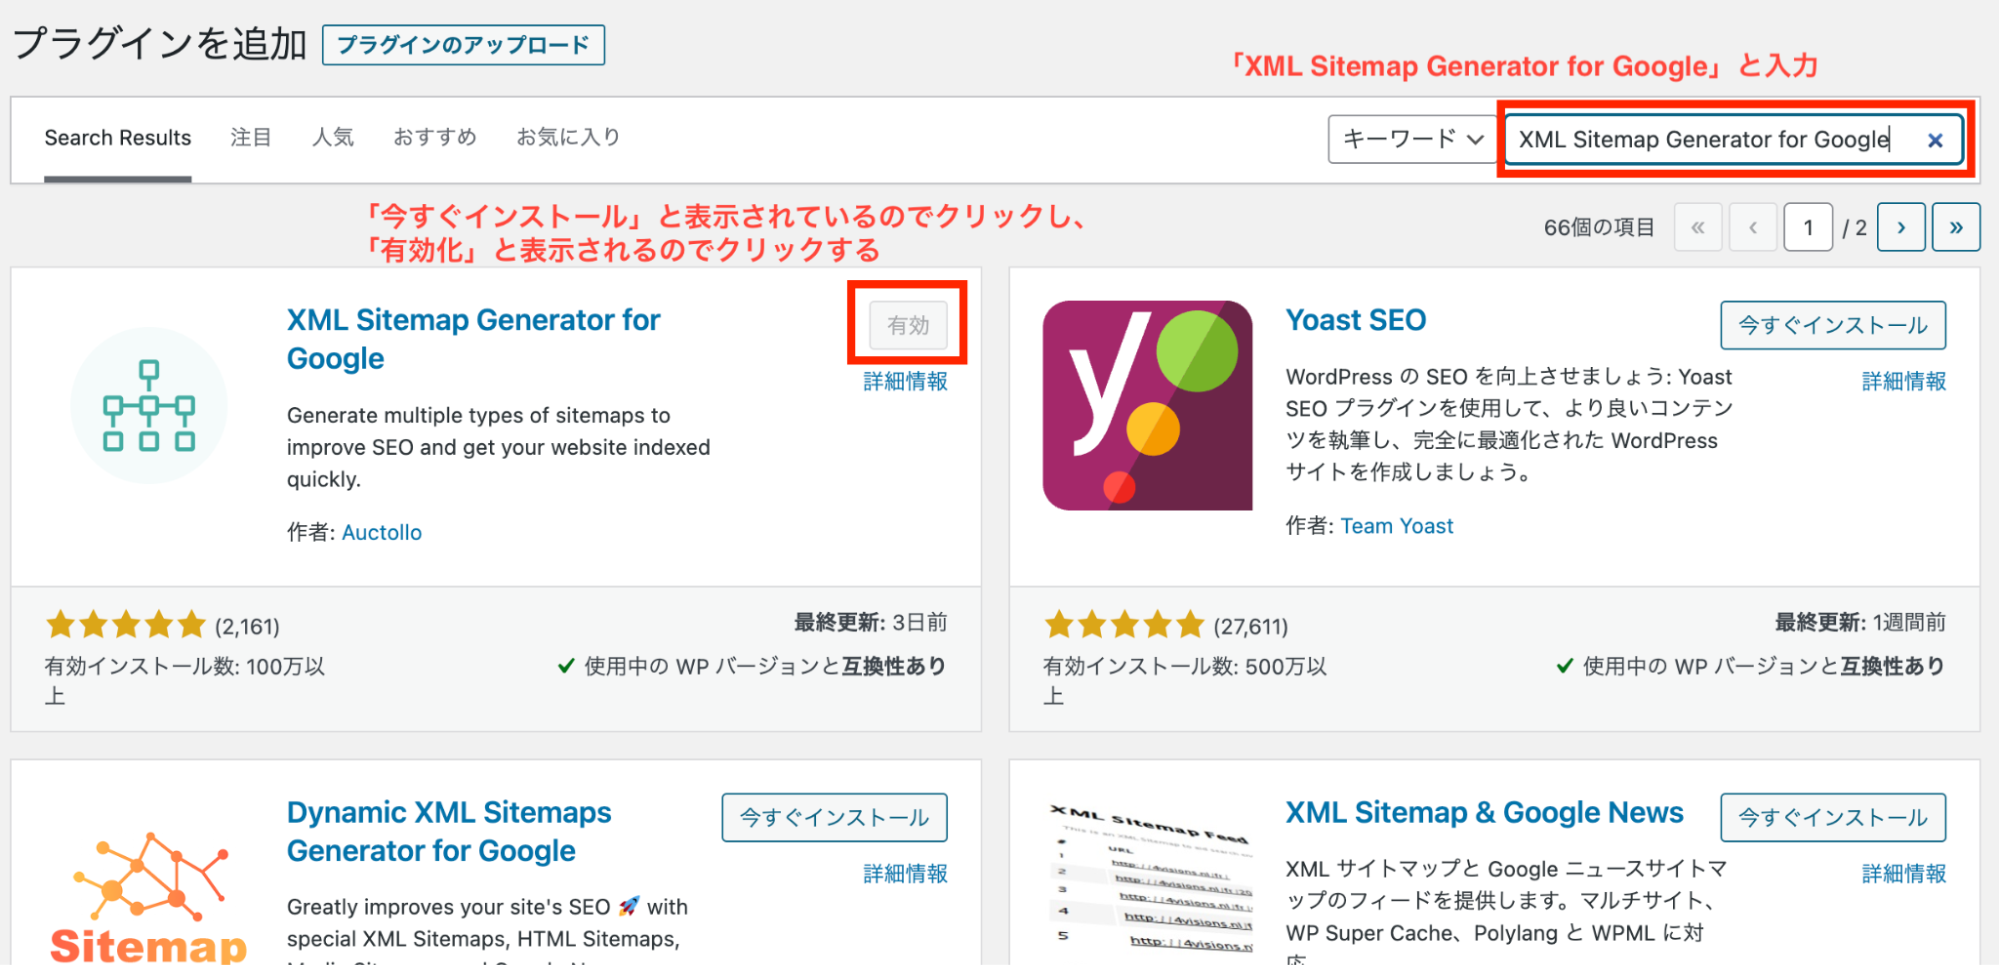 WordPressのプラグイン追加ページで「XML Sitemap Generator for Google」を検索し有効化をクリックした画像